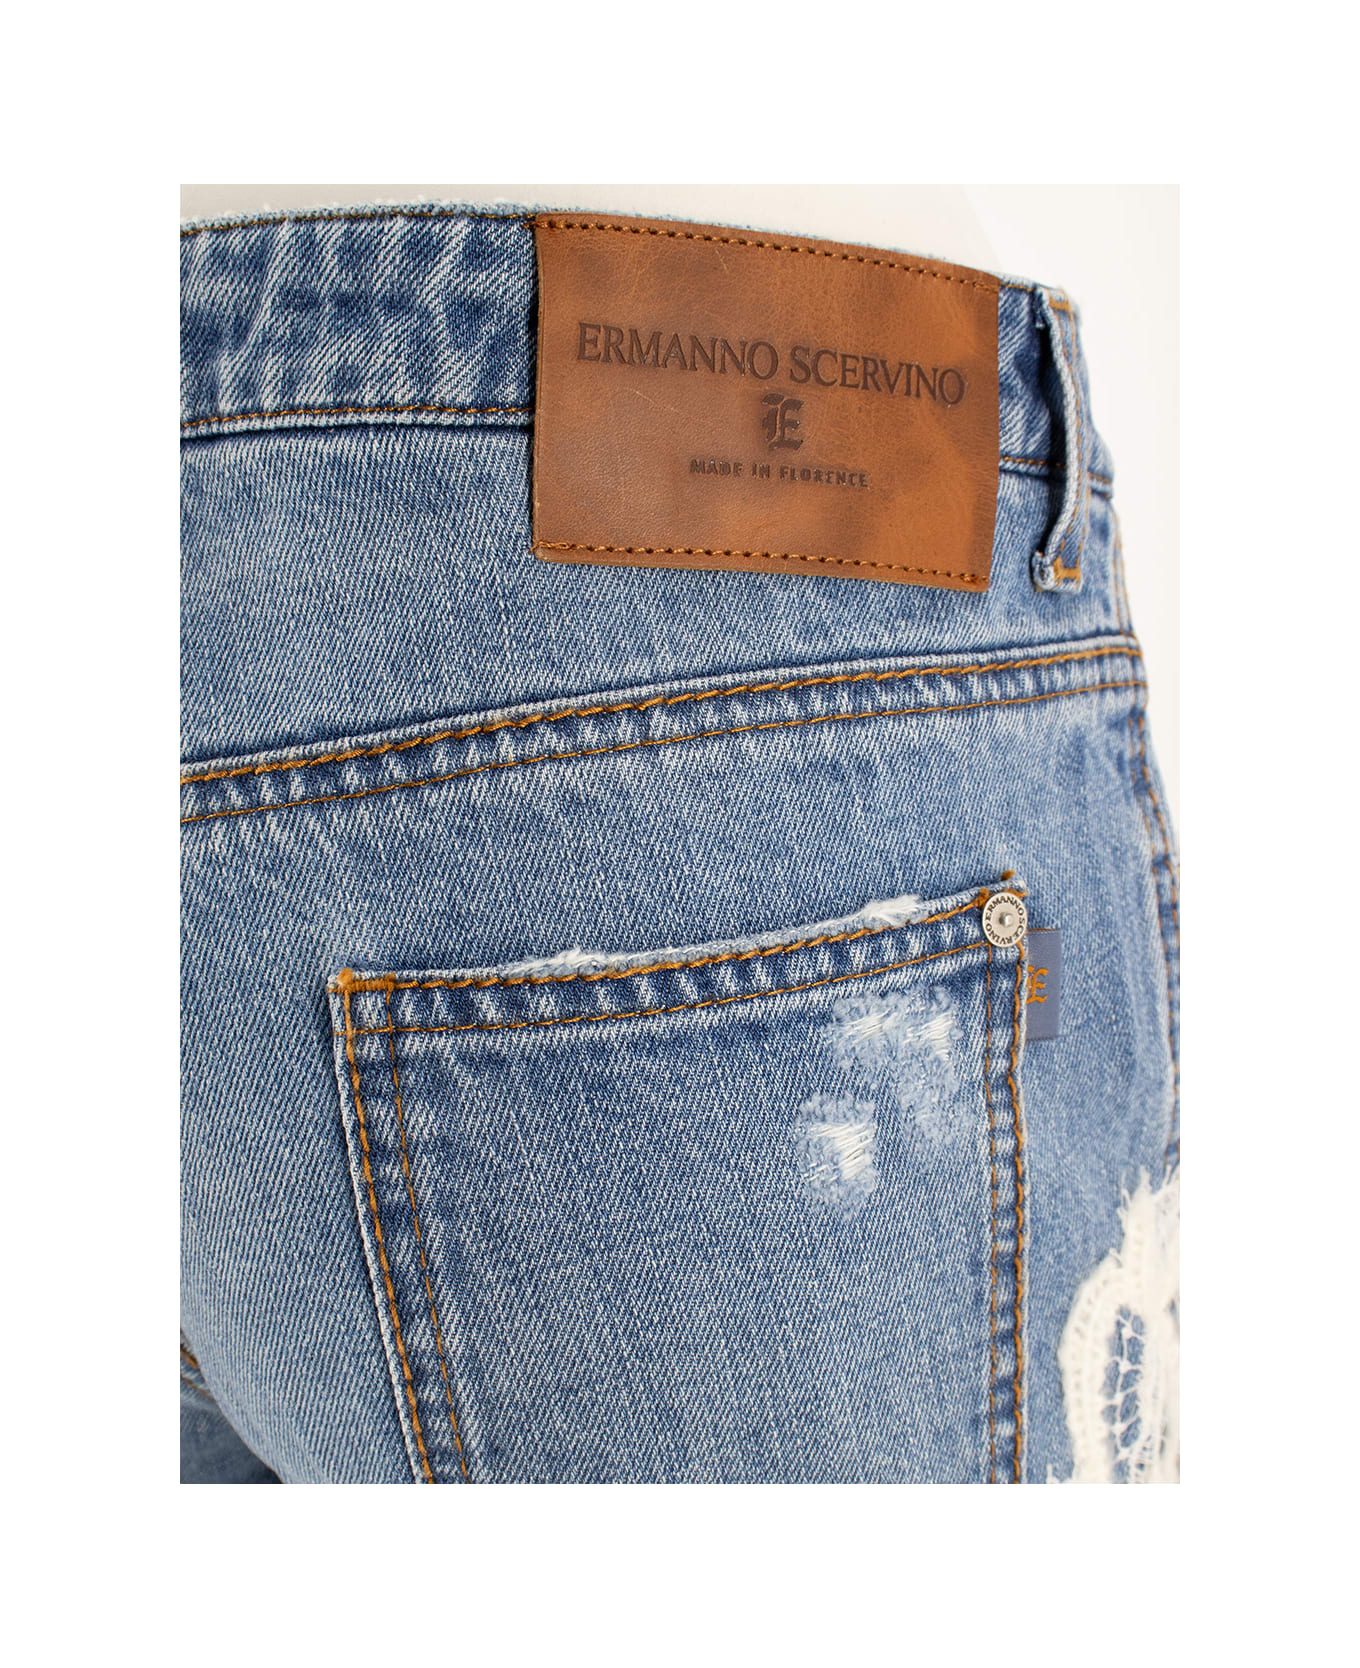 Ermanno Scervino Jeans - BRIGHT COBALT